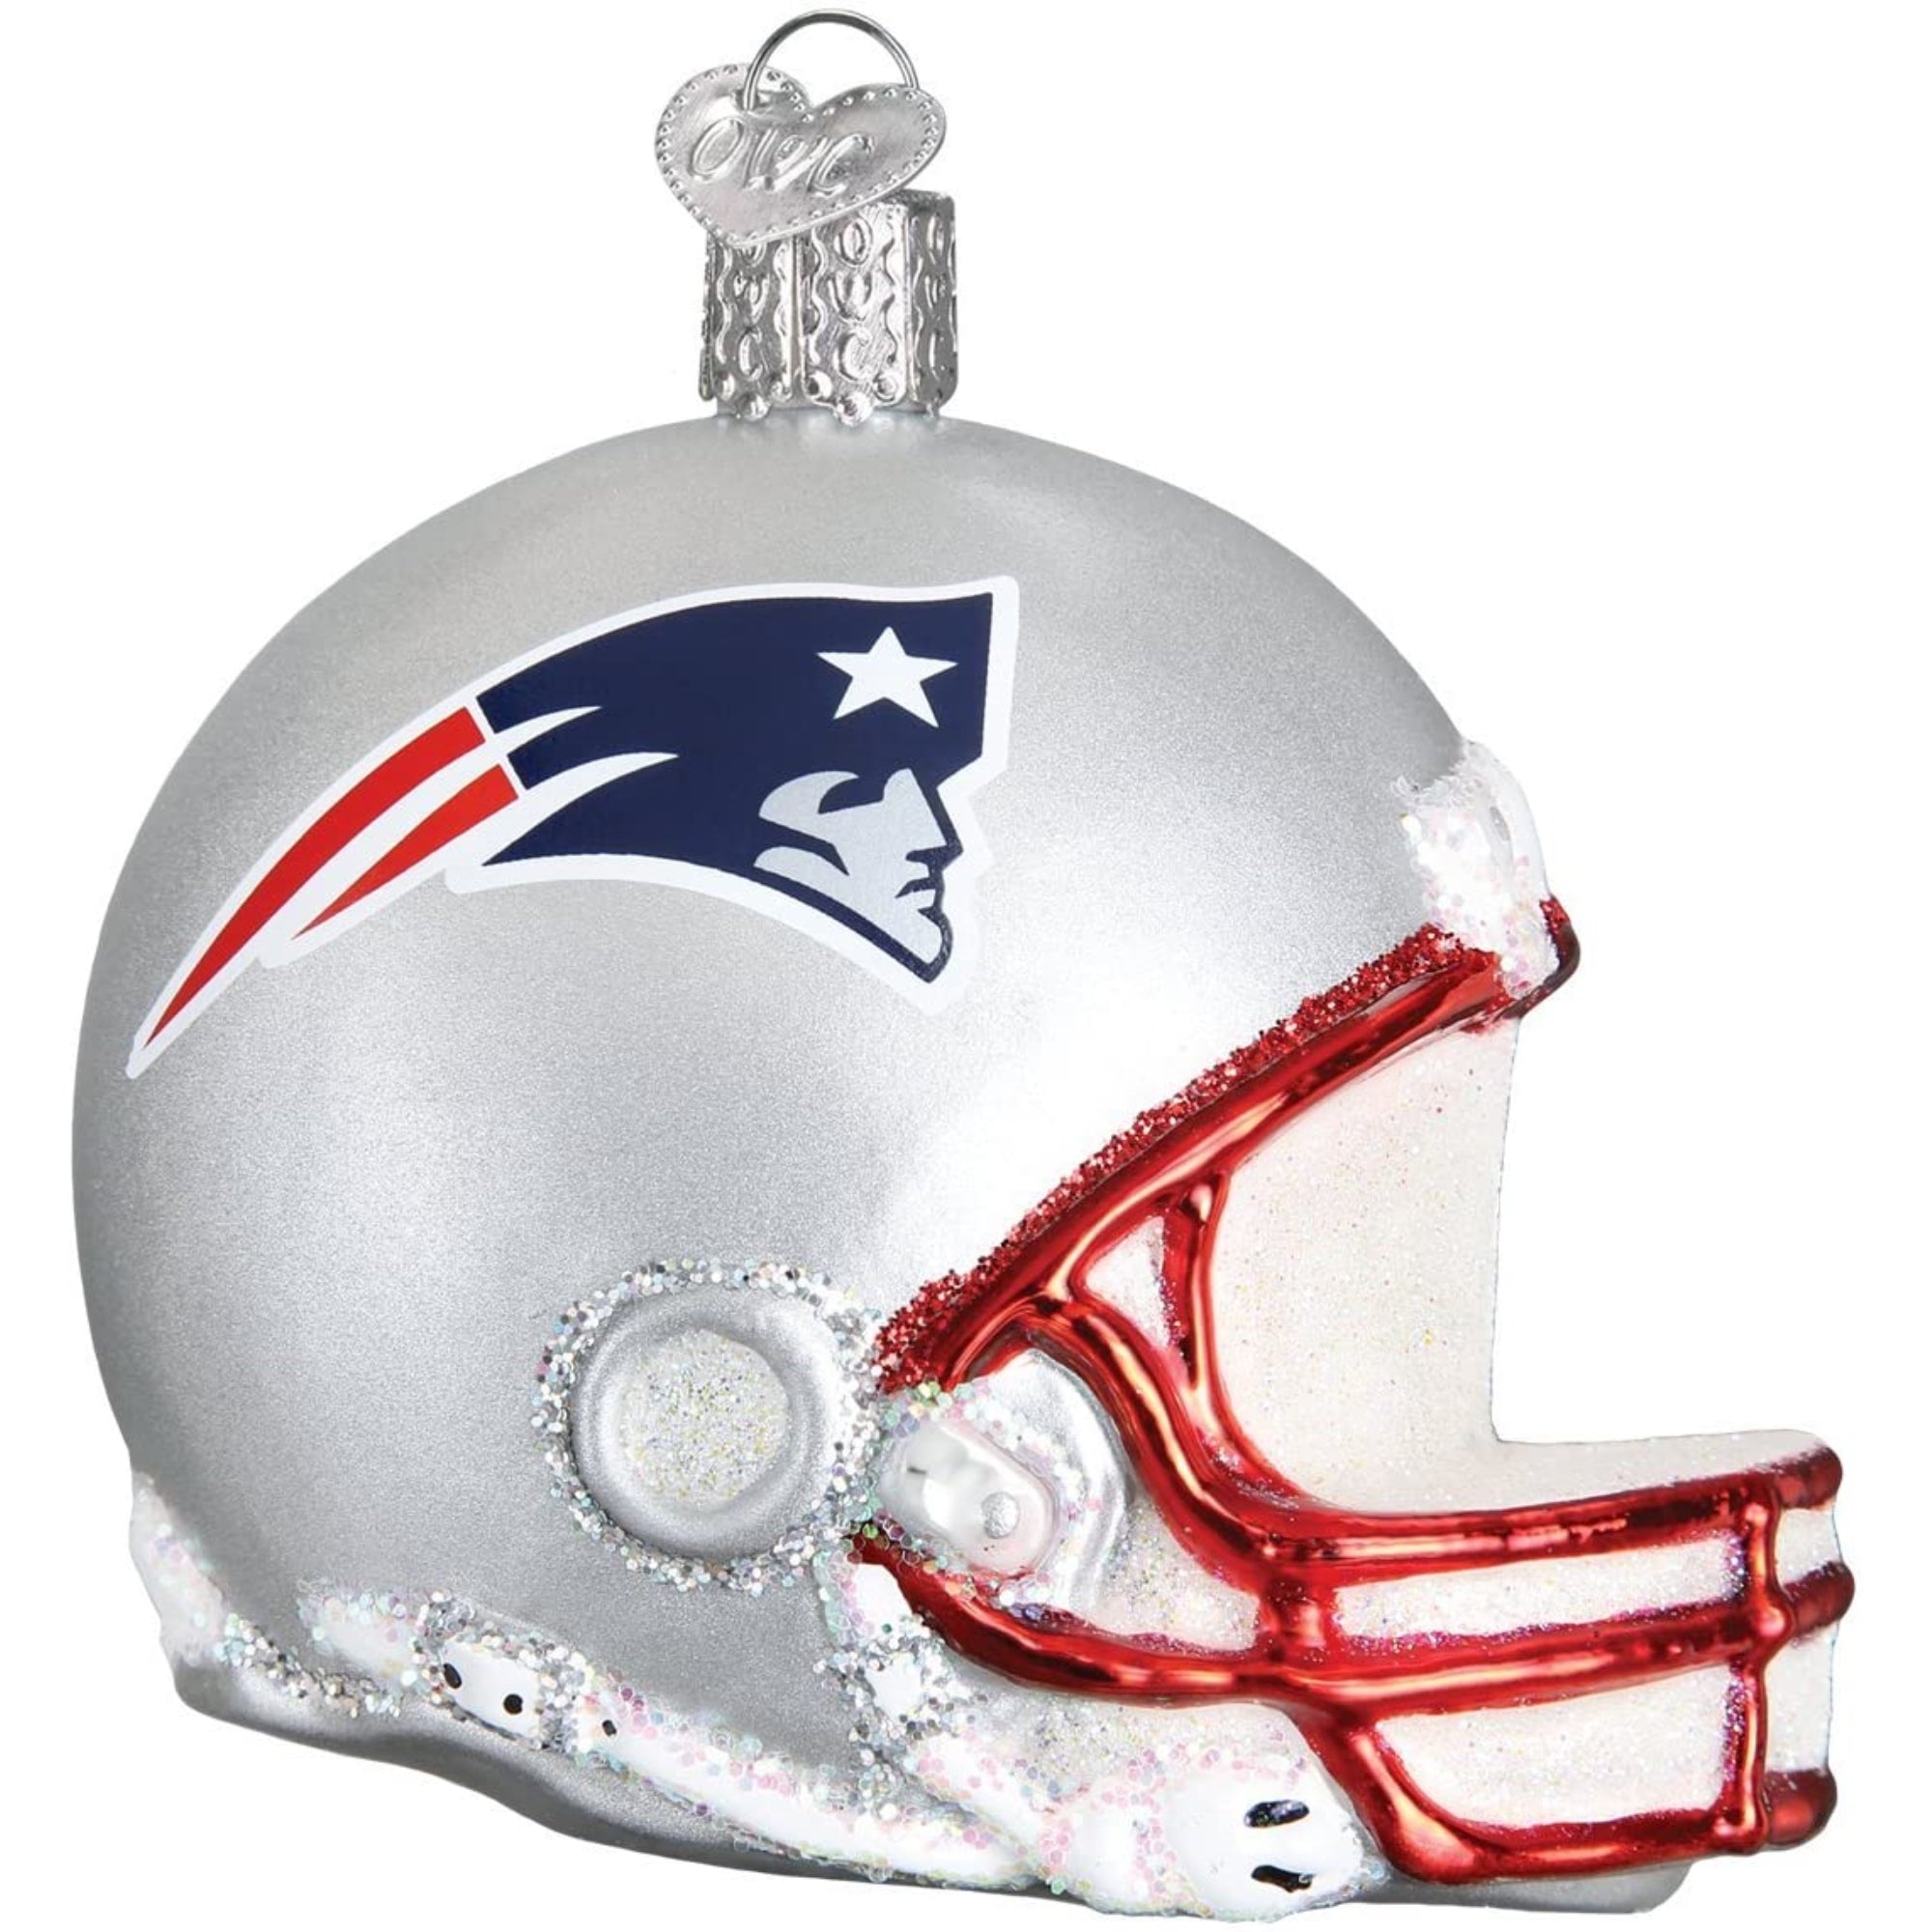 Old World Christmas New England Patriots Helmet Ornament For Christmas Tree